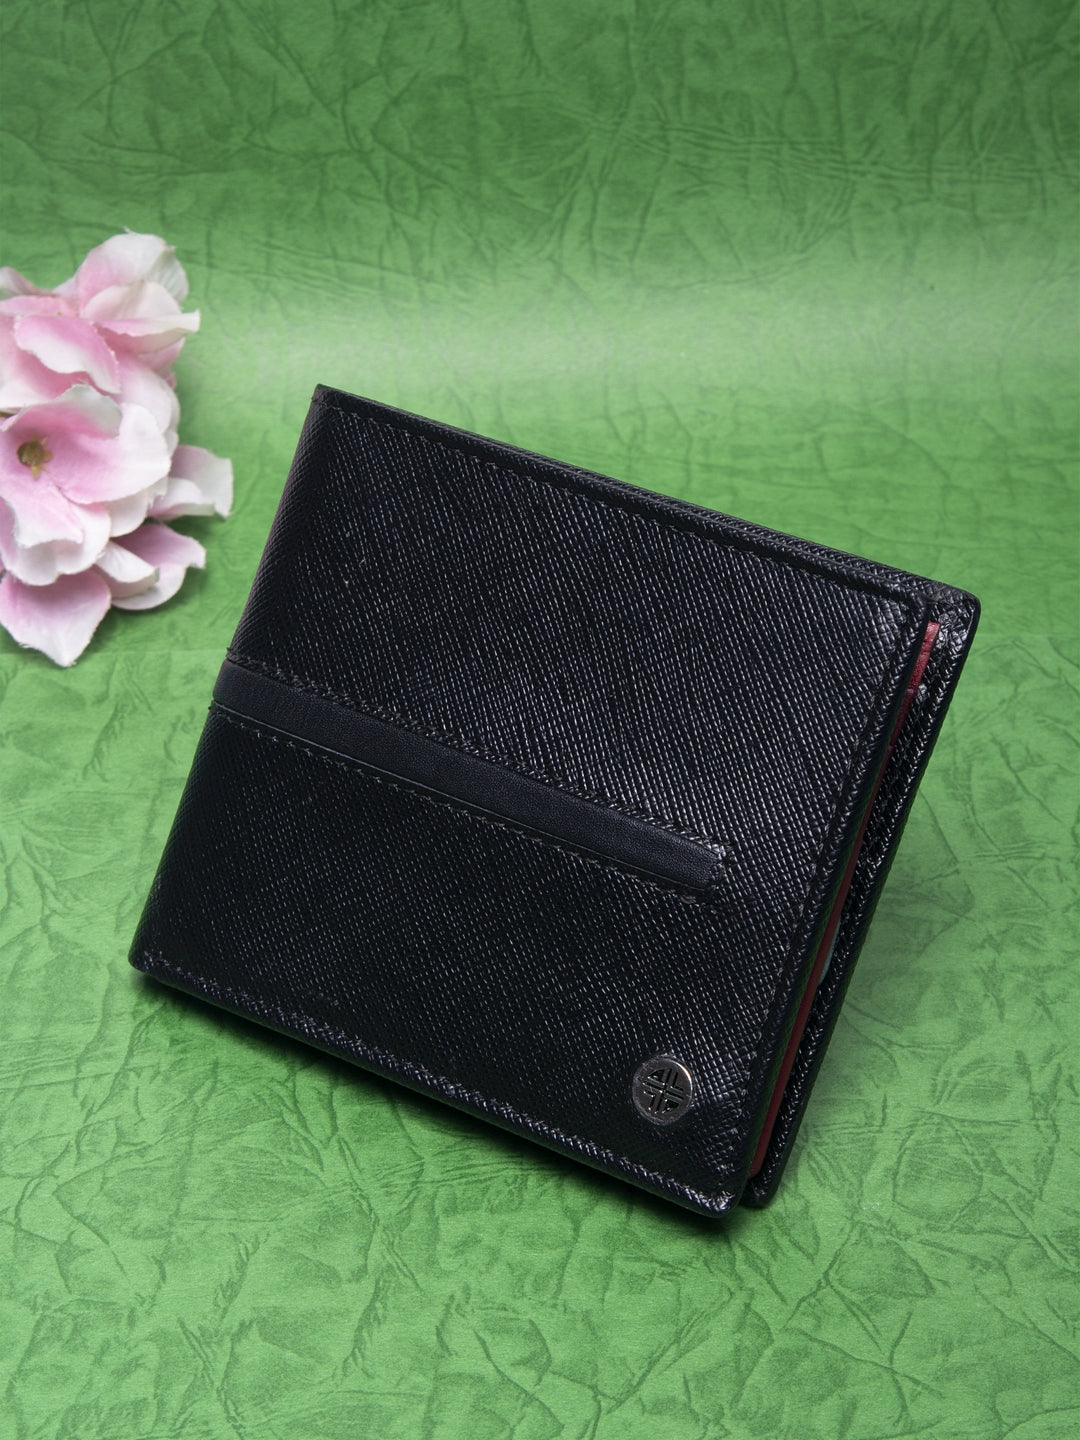 RFID Men Black Two Fold Leather Wallet